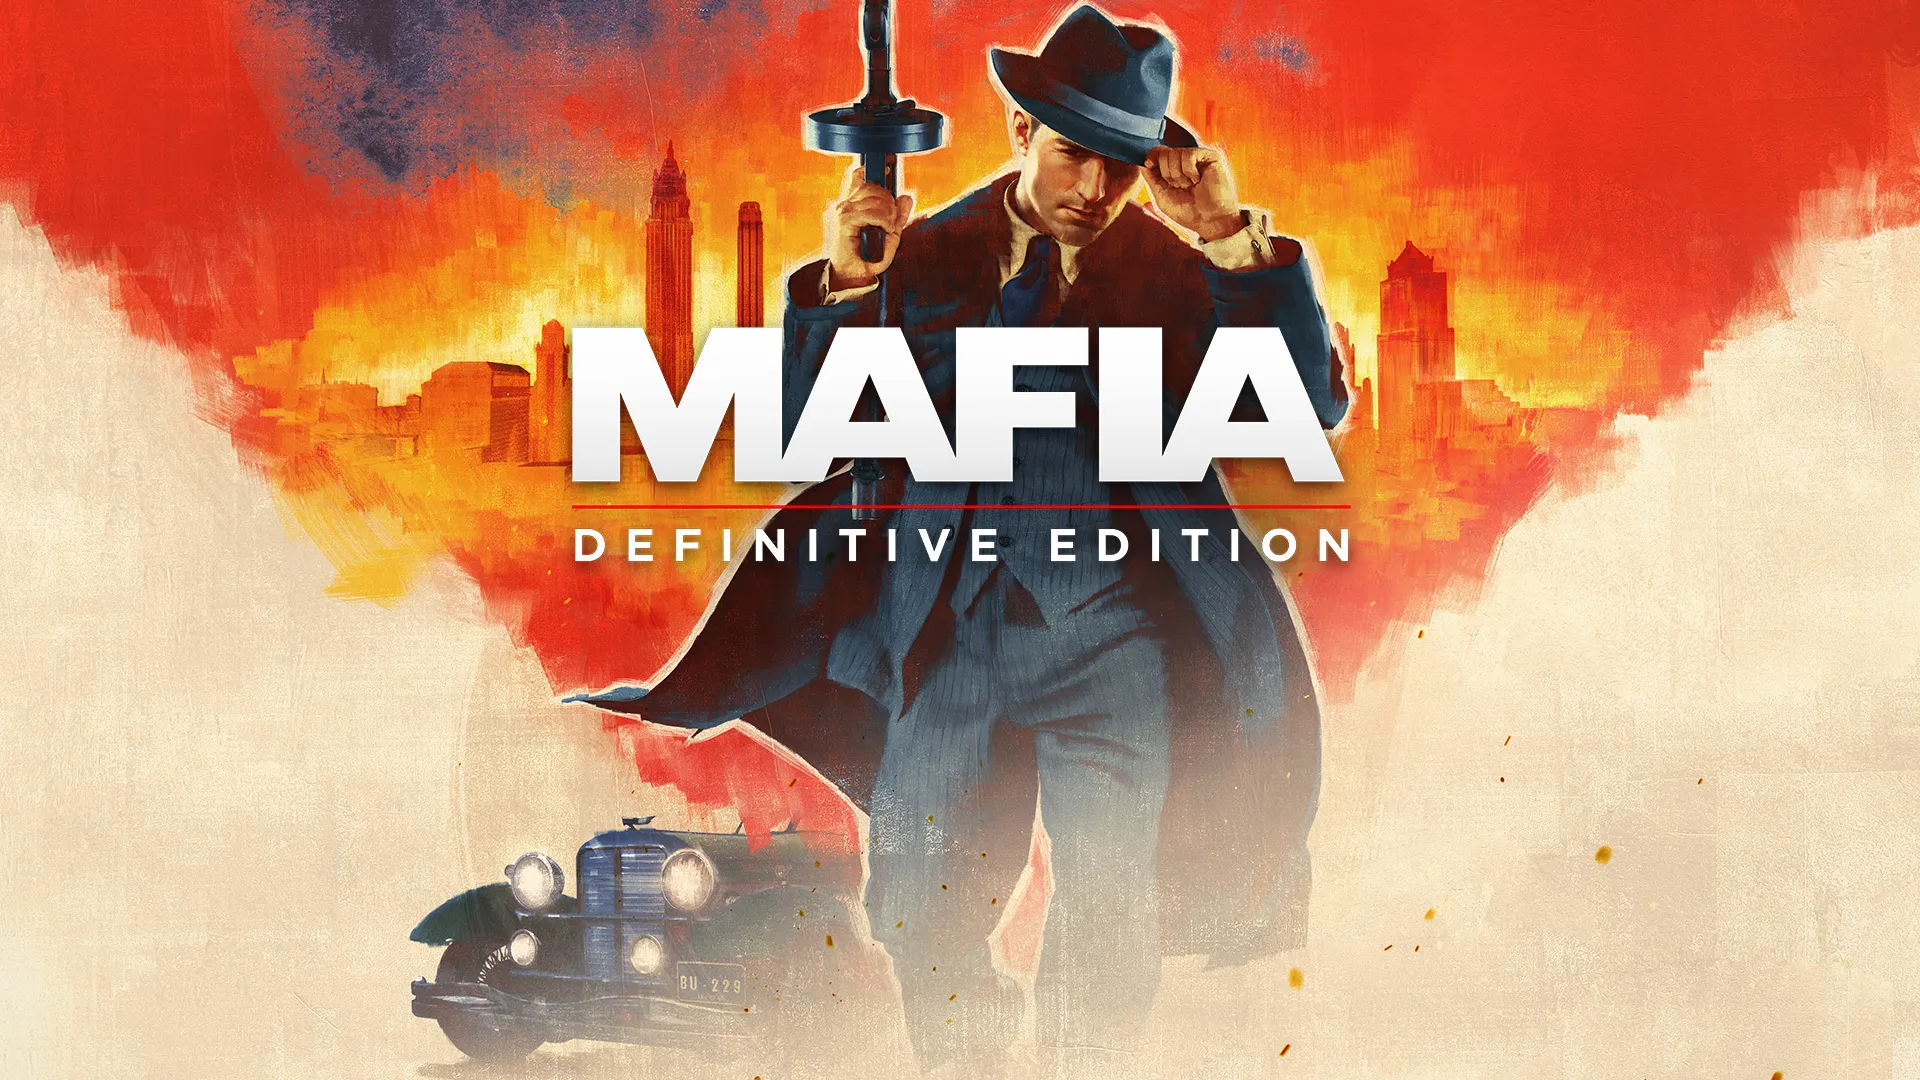 Mafia Definitive Edition rog ally game settings